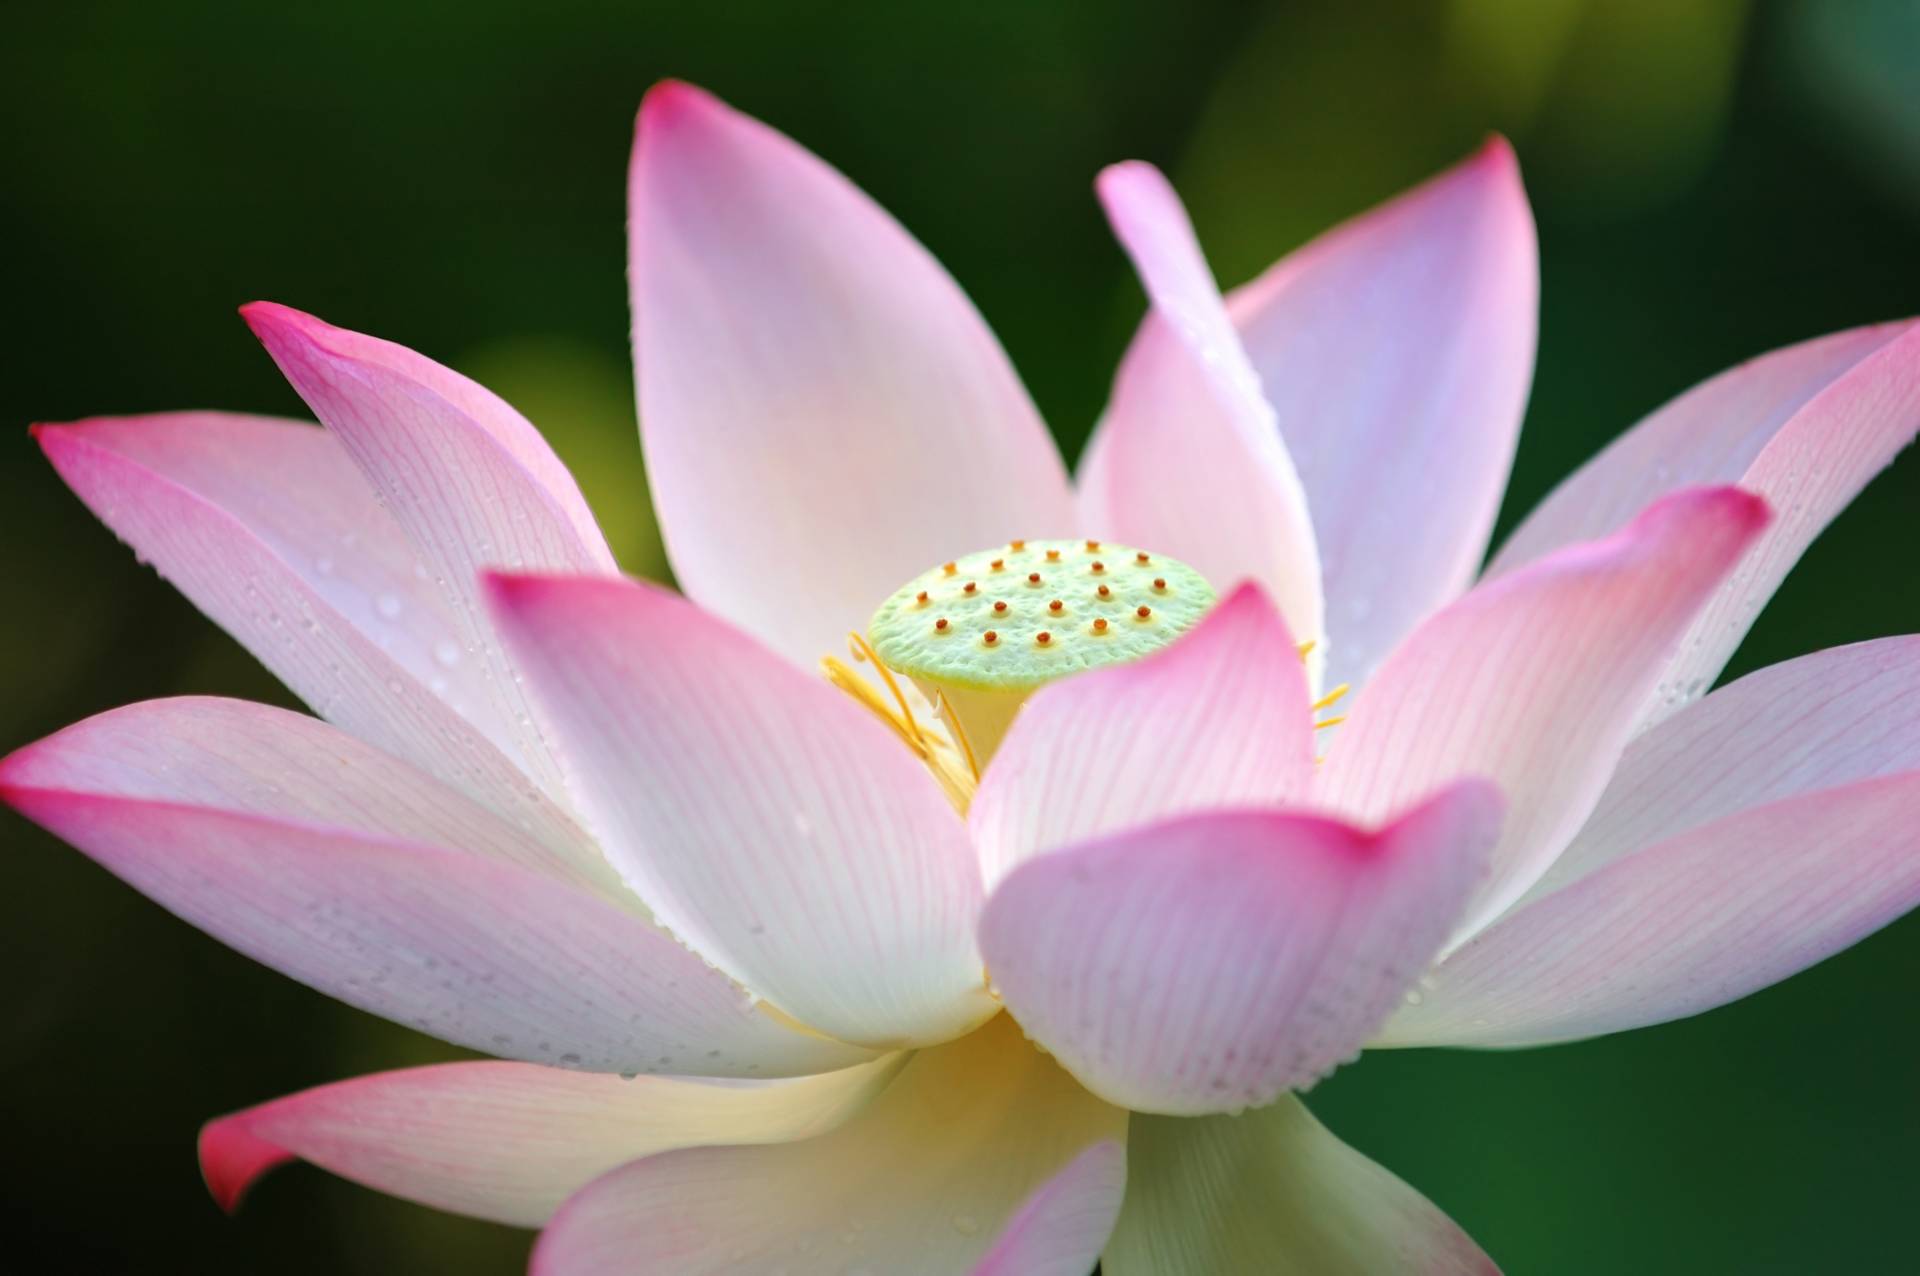 Papermoon Fototapete »Lotus Flower« von Papermoon